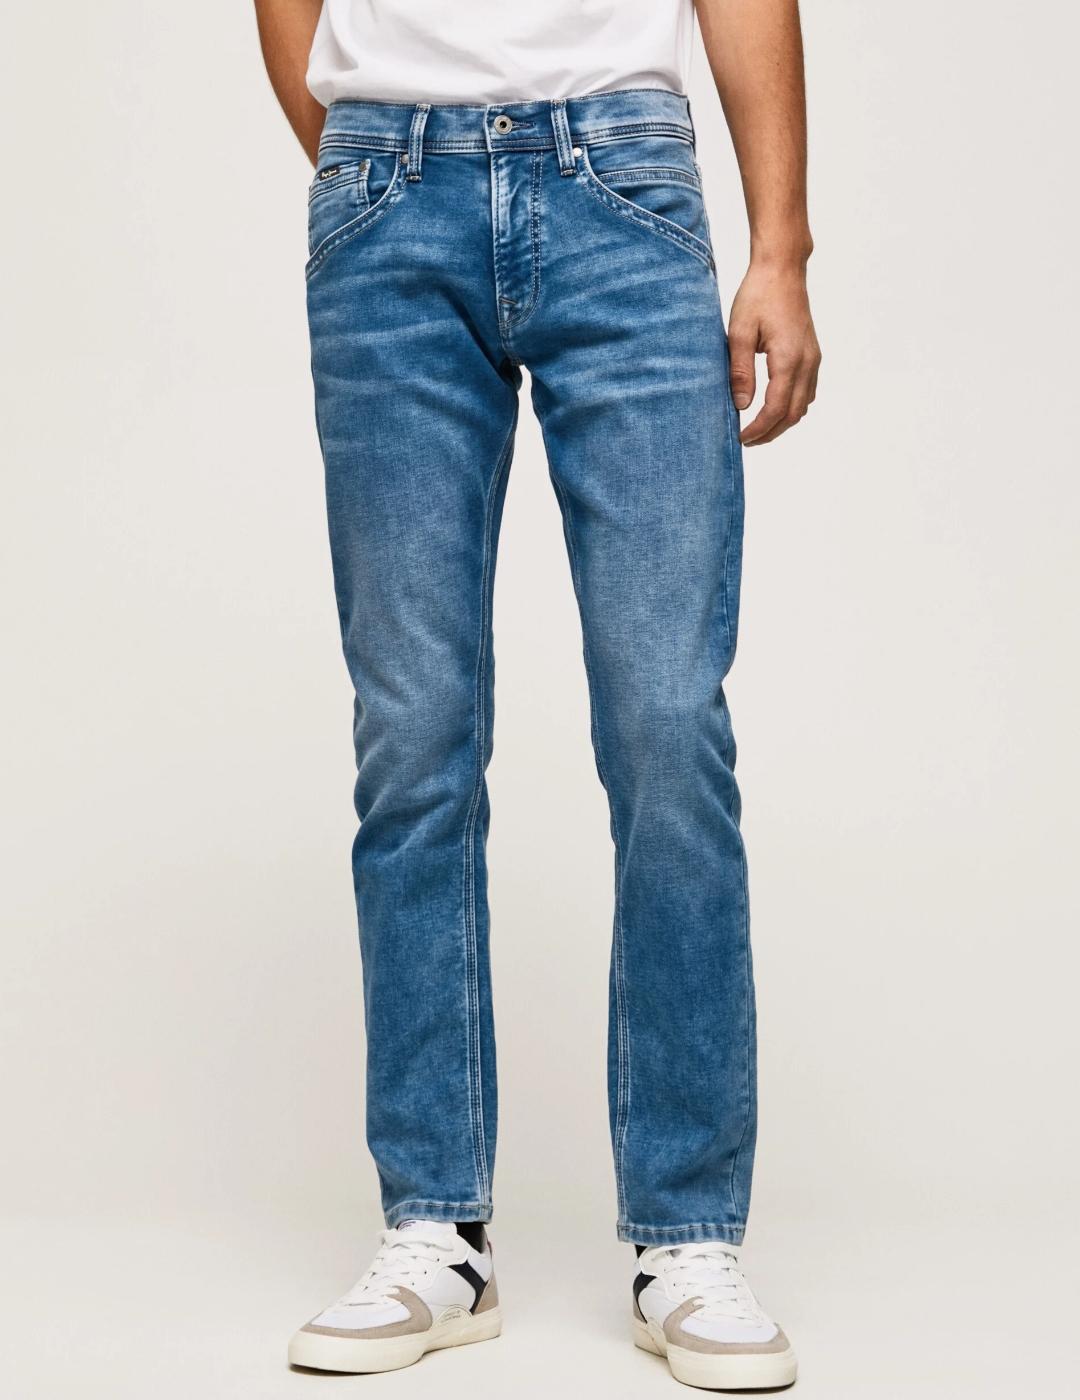 Jean azul Track fit y tiro regular hombre pepe jeans